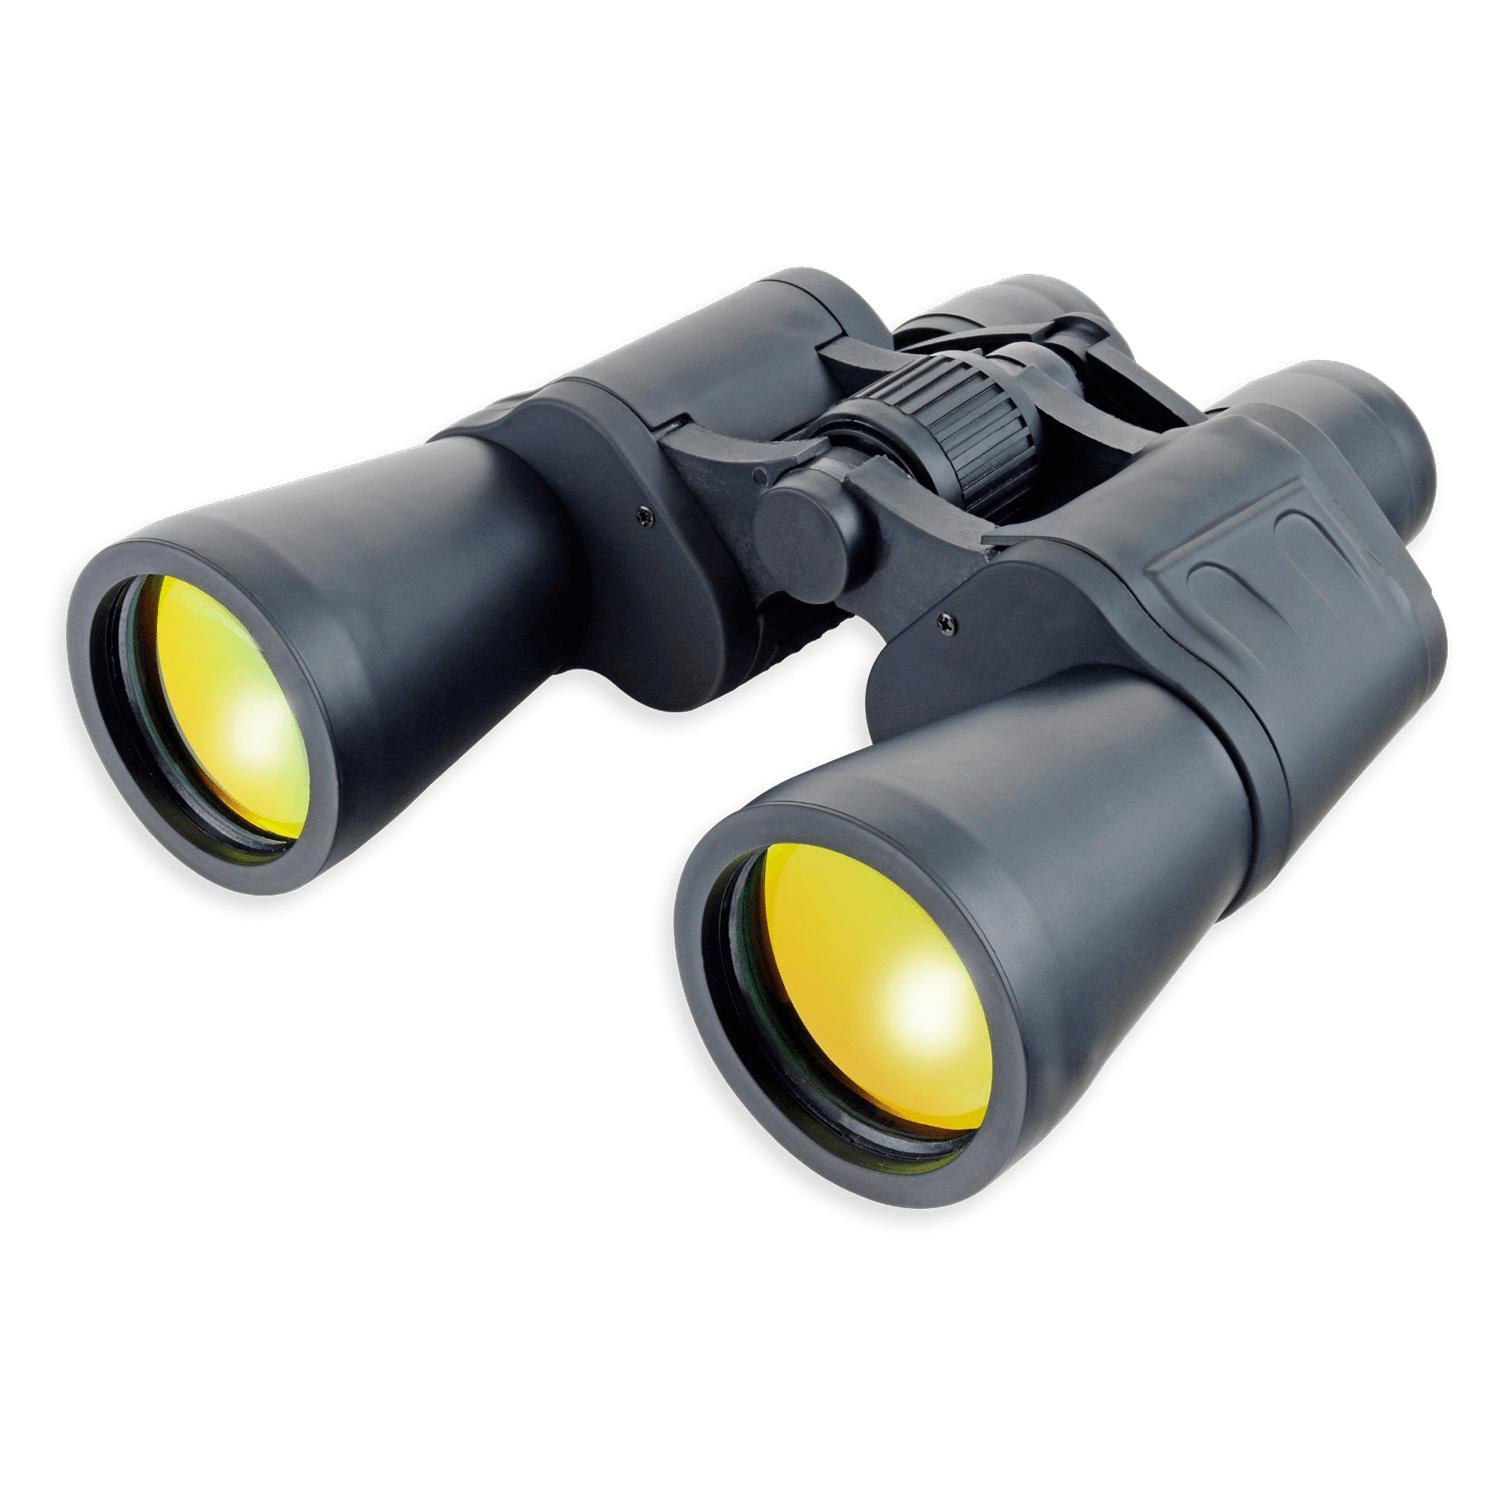 High-Quality Binoculars